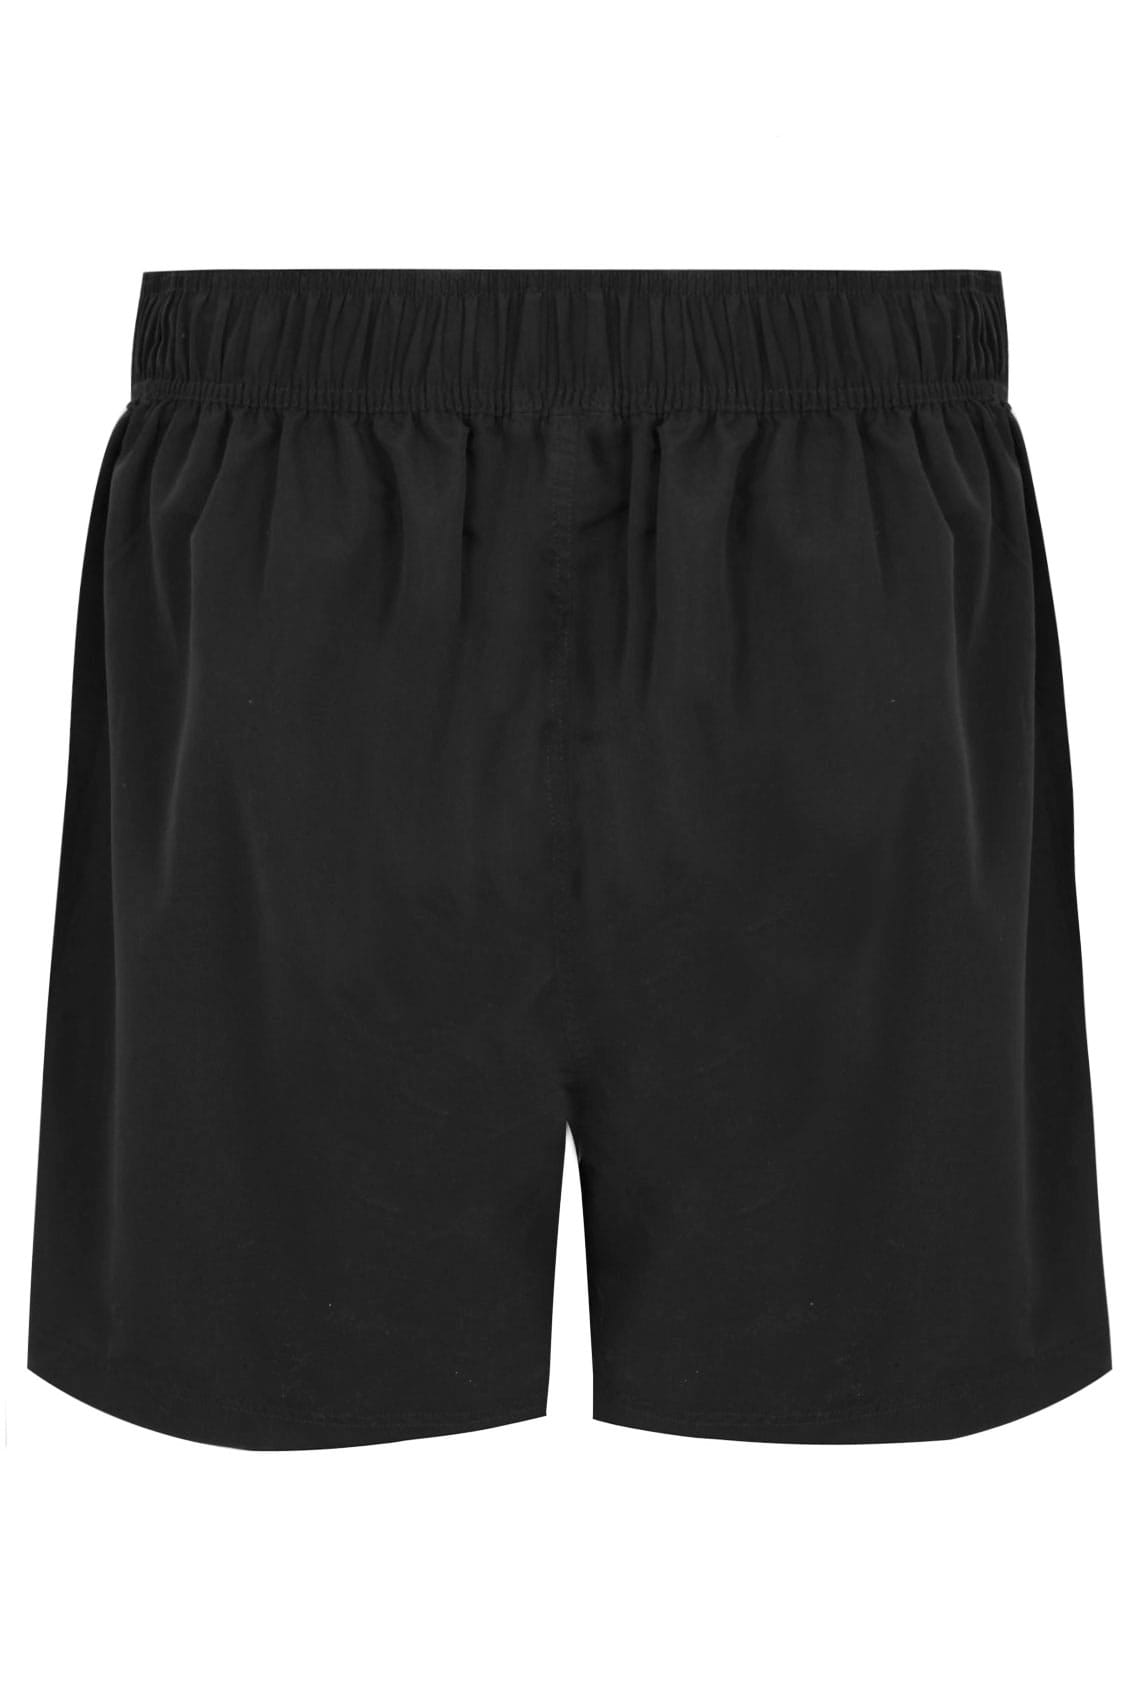 Black Multi-Purpose Swim Shorts With Drawstring Waist, Plus Size 16 to 32